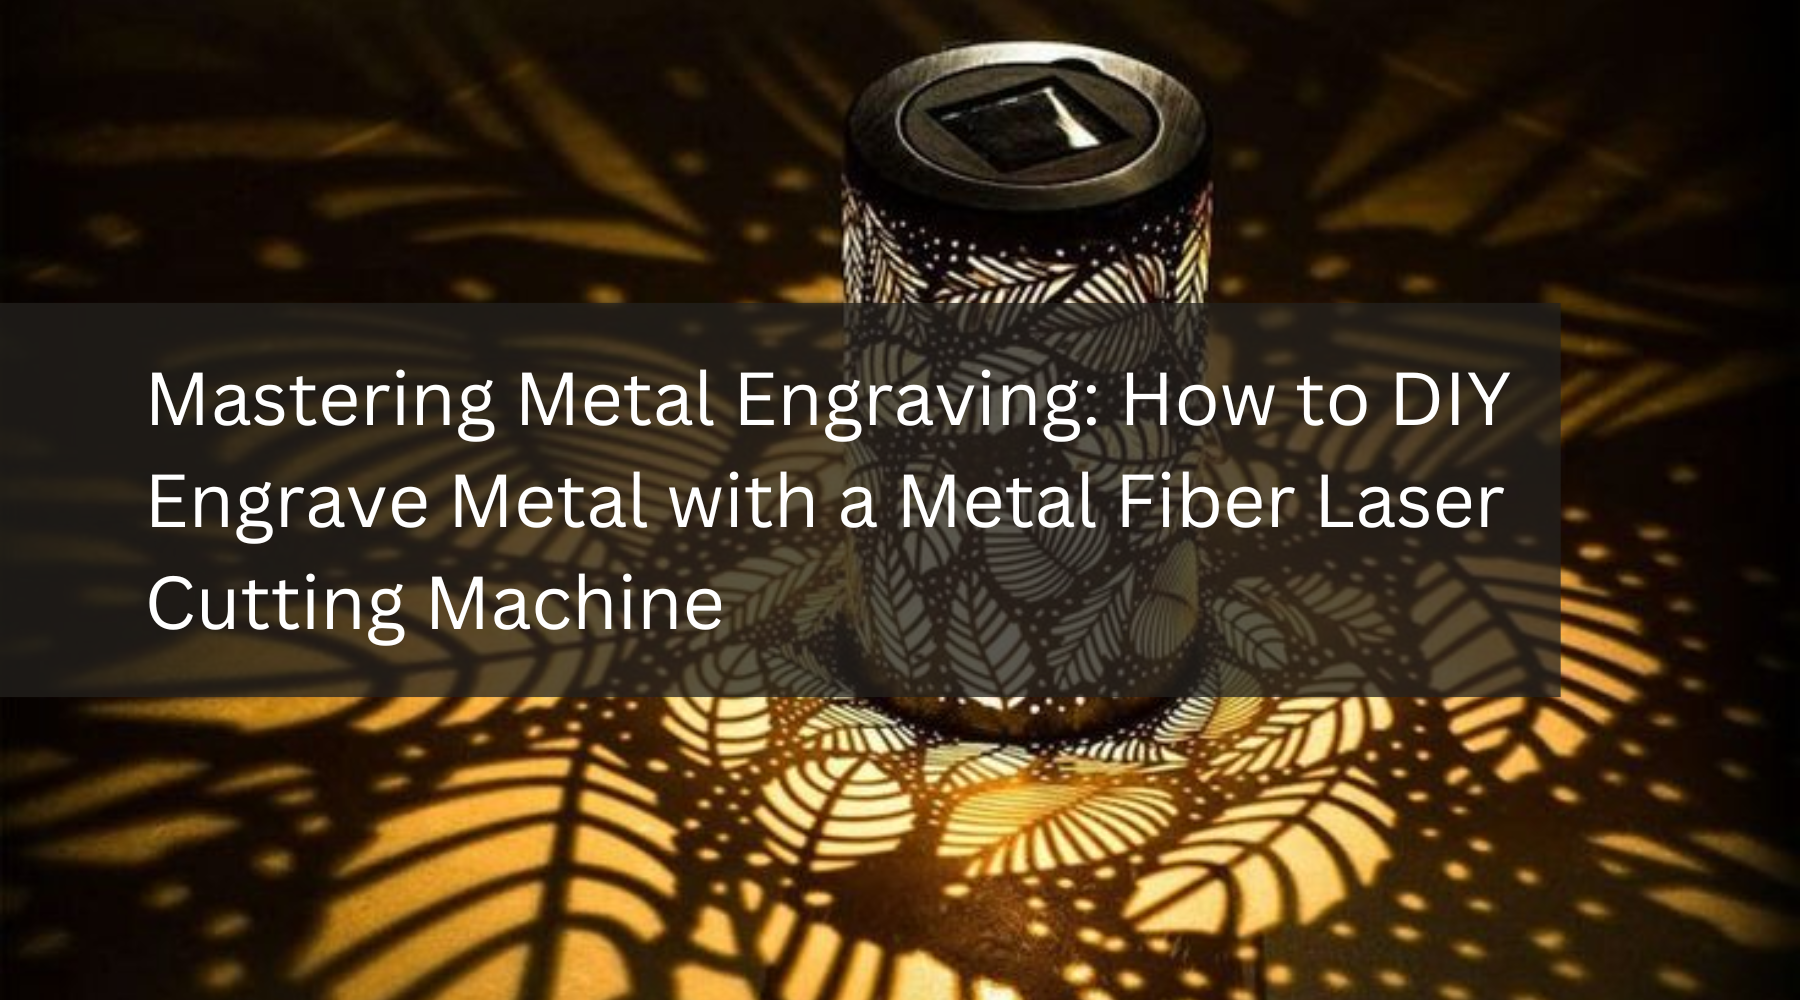 Mastering Metal Engraving: How to DIY Engrave Metal with a Metal Fiber Laser Cutting Machine